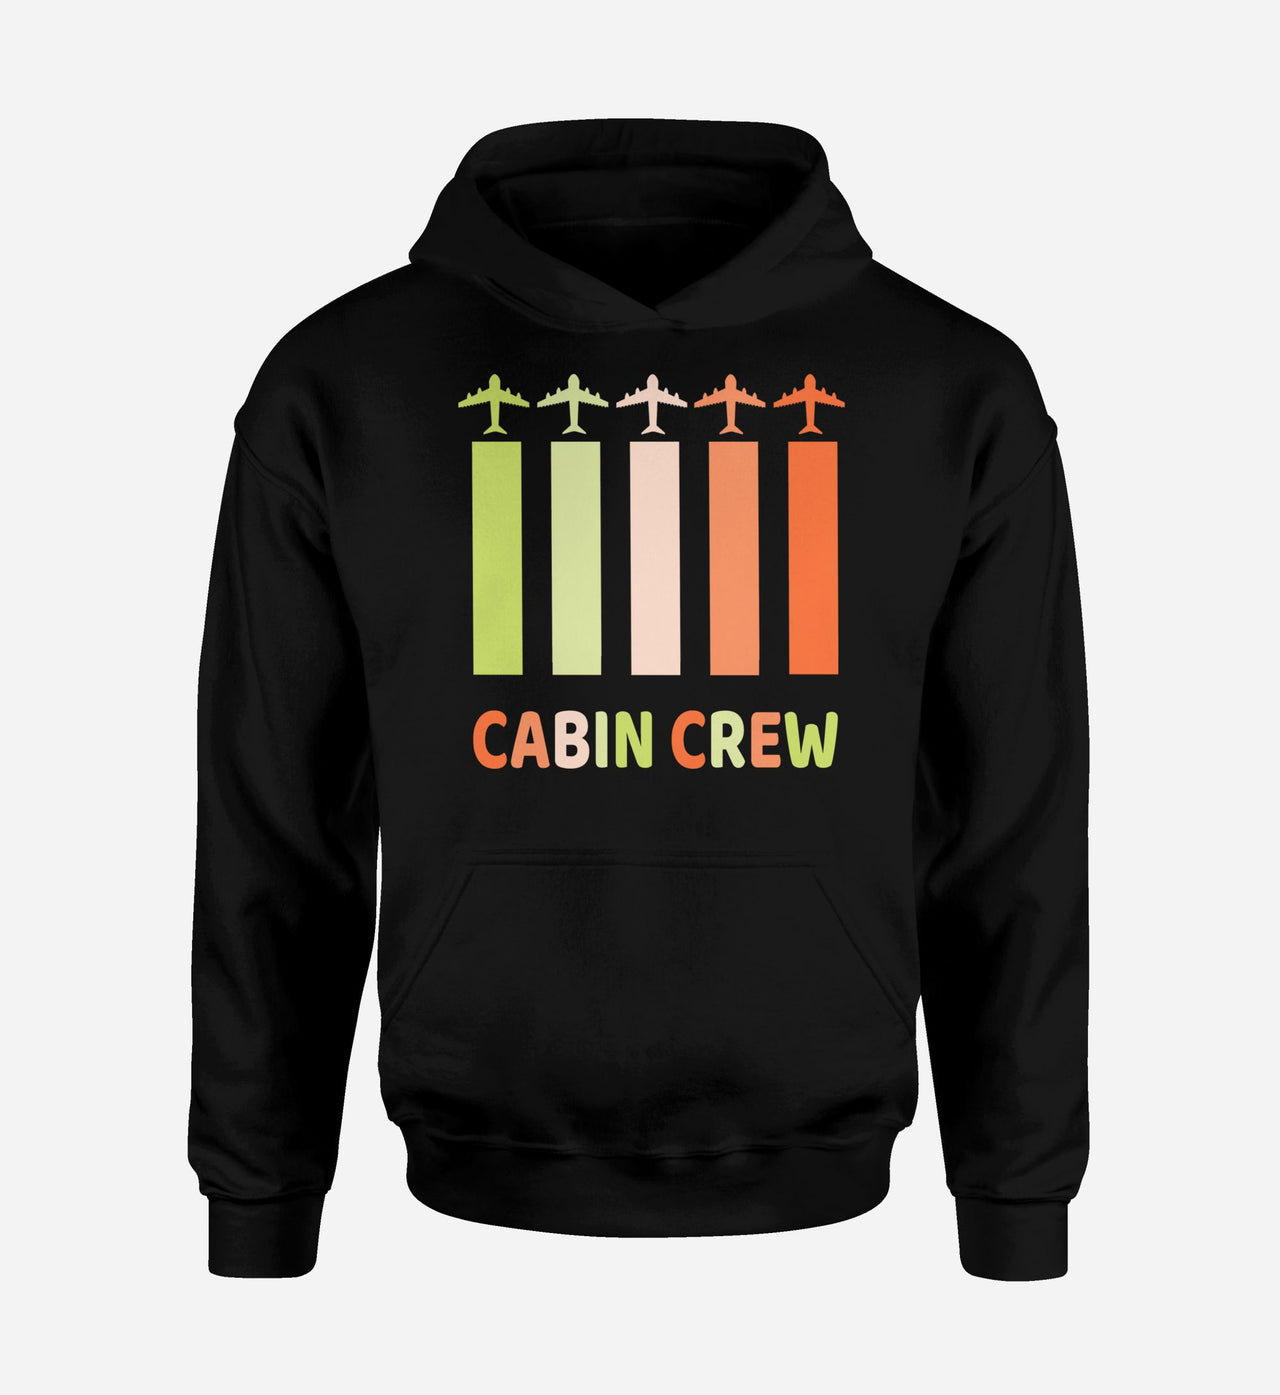 Colourful Cabin Crew Designed Hoodies